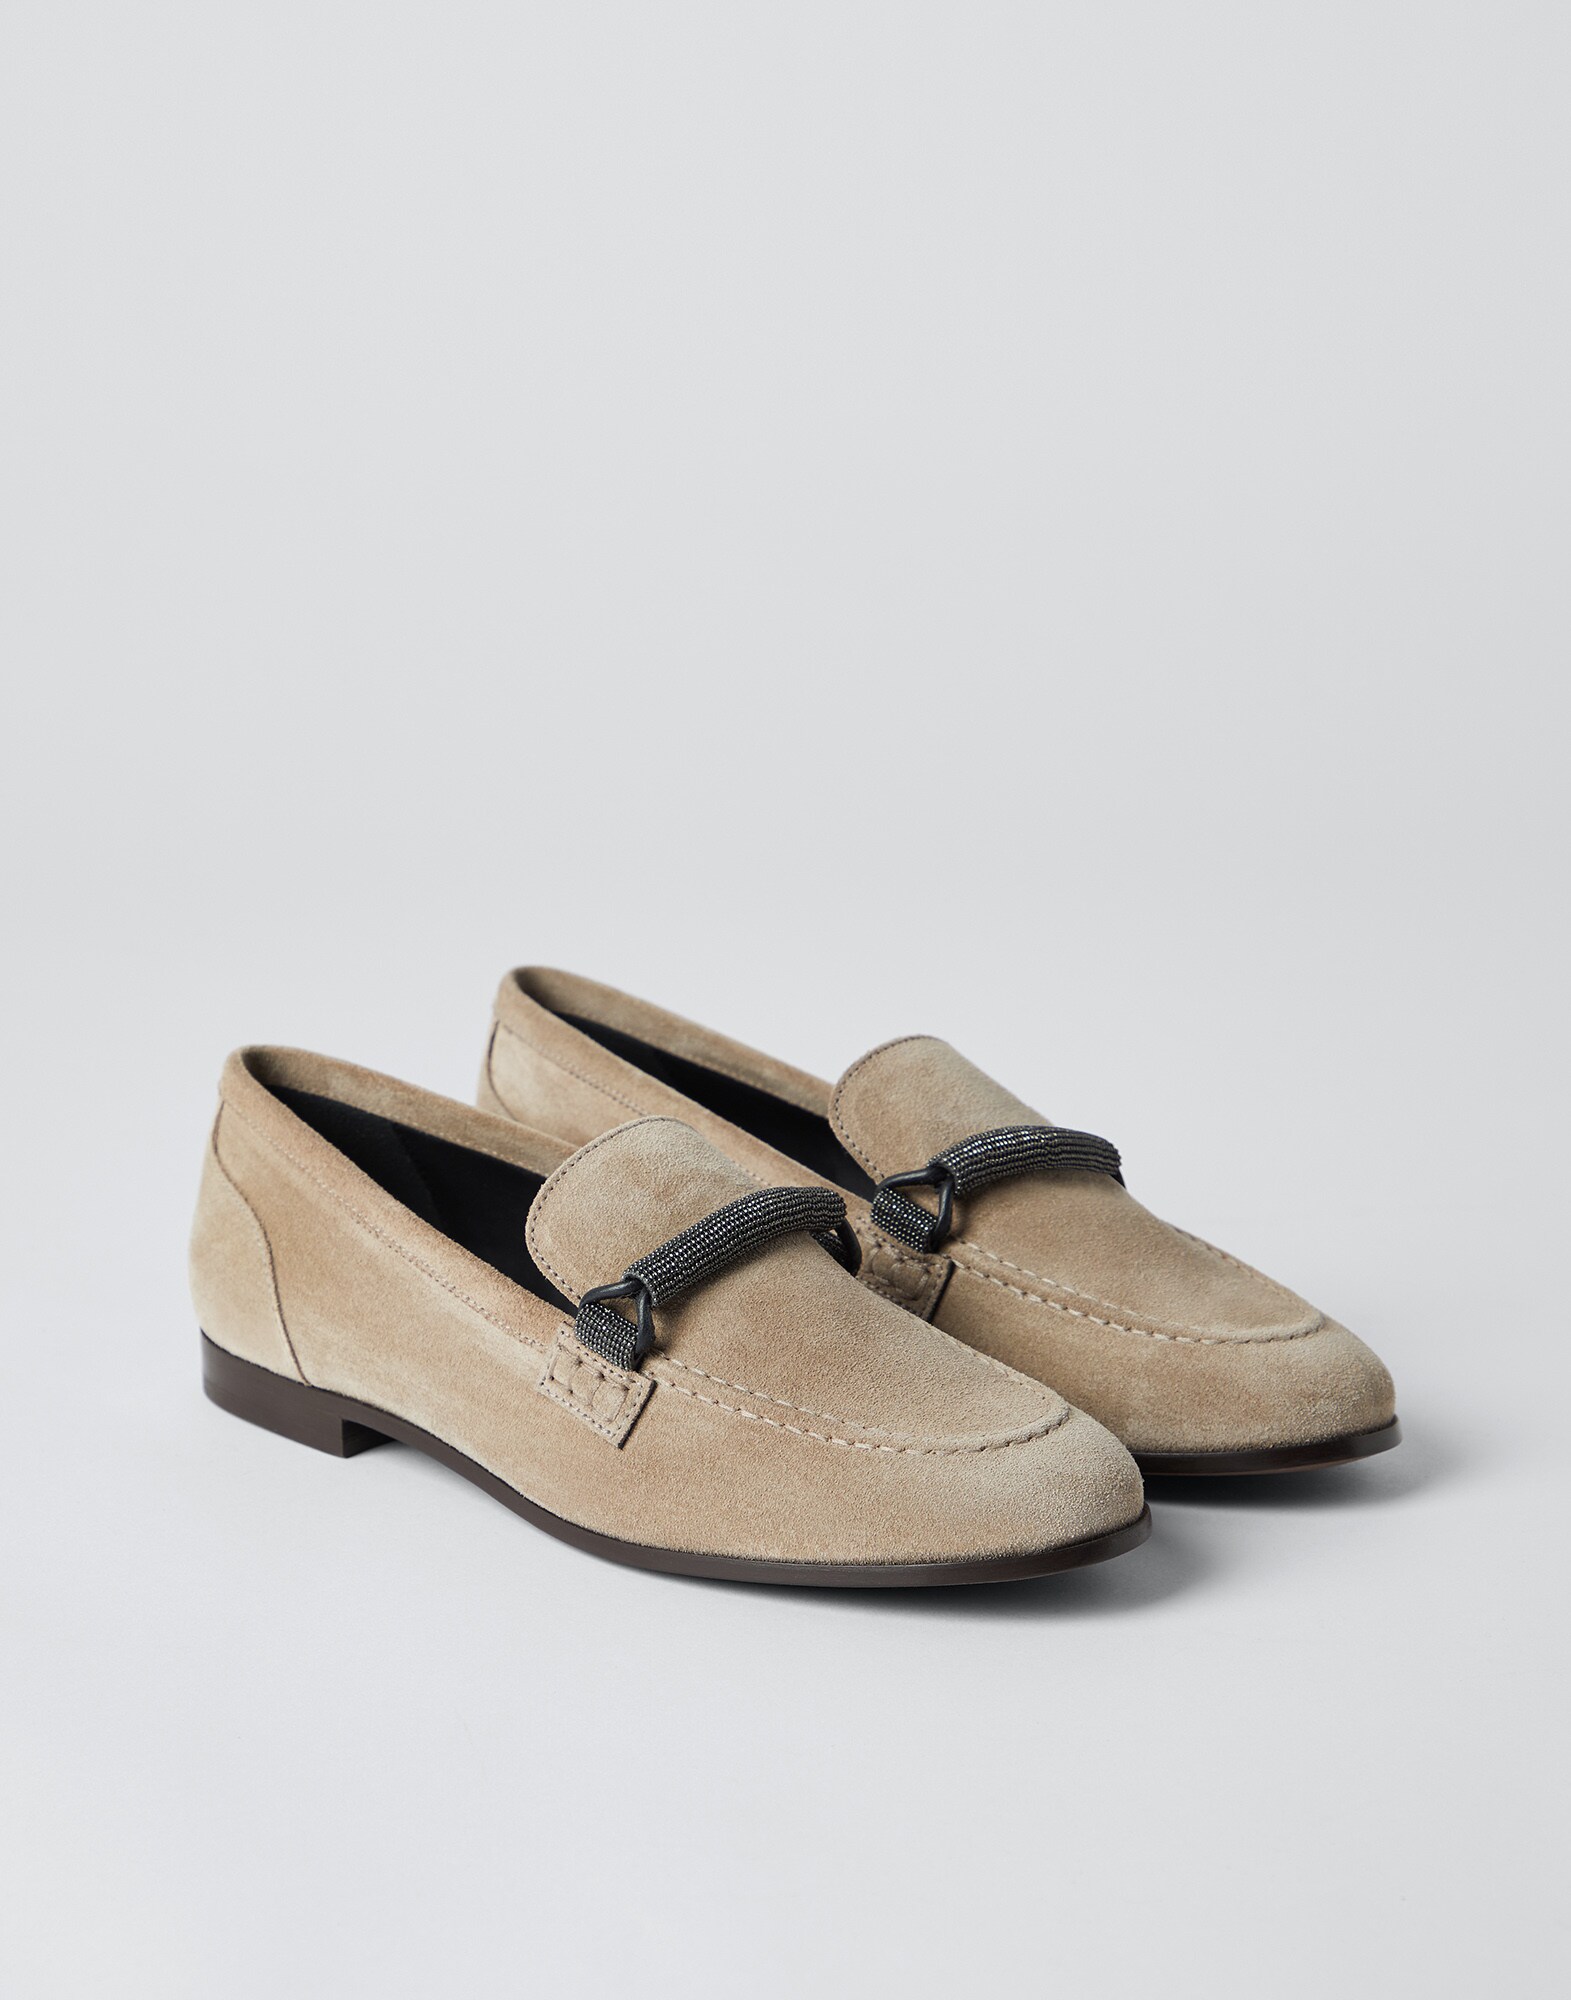 Suede loafers Hazelnut Woman - Brunello Cucinelli